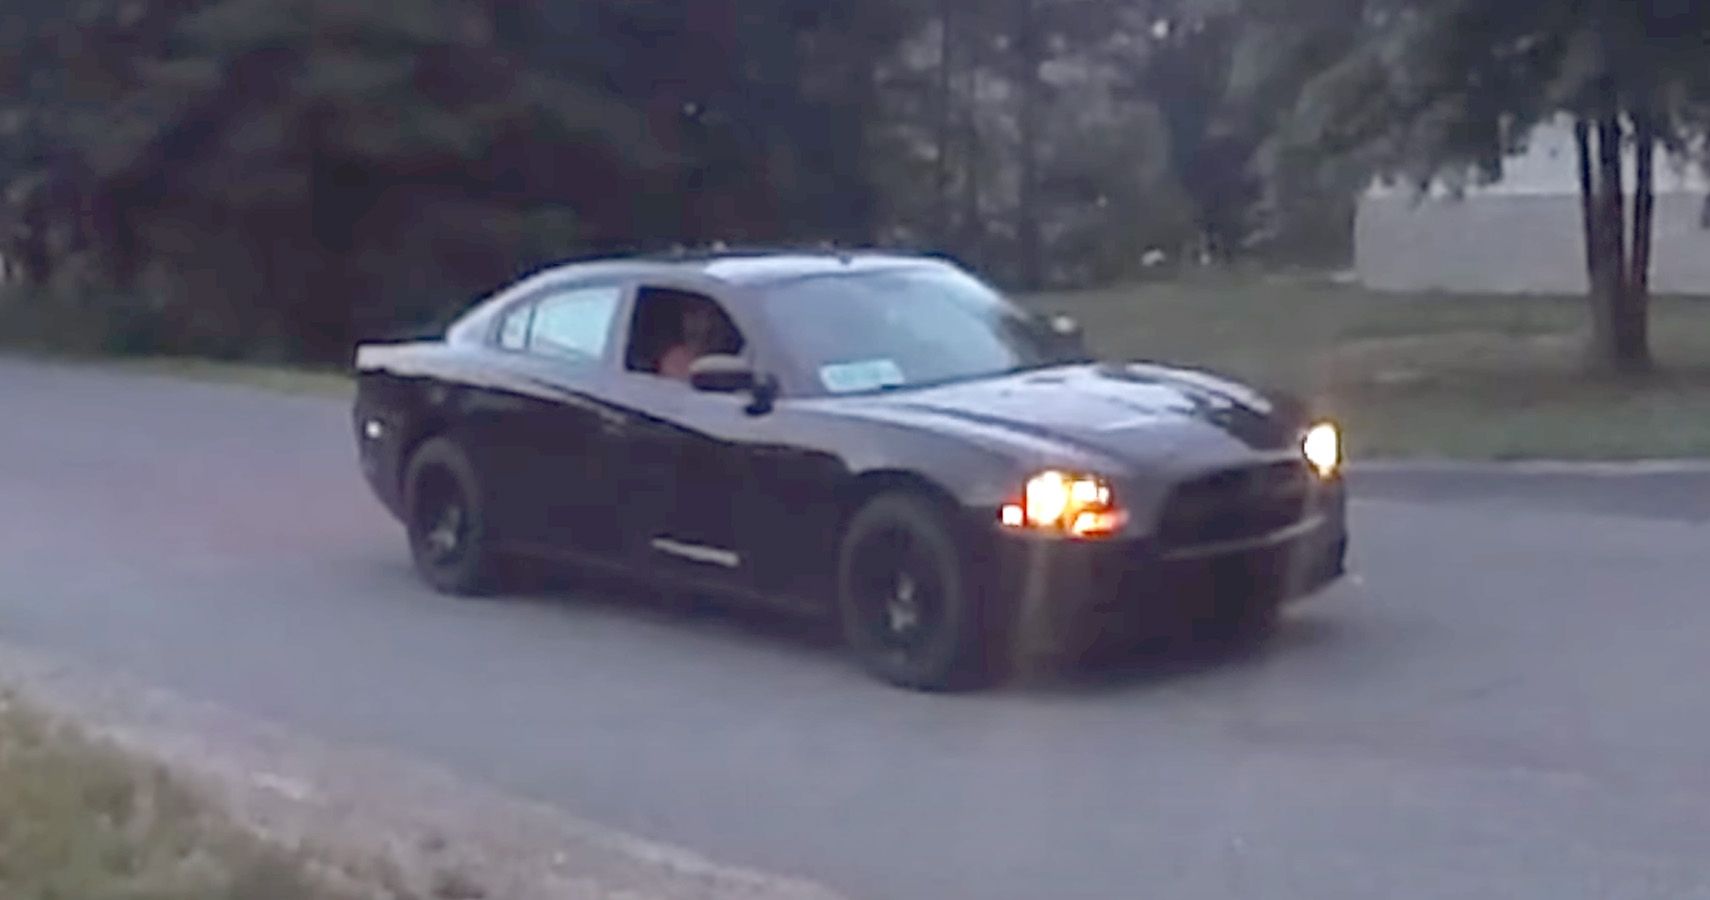 Black Dodge Charger police pursuit vehicle on rural road